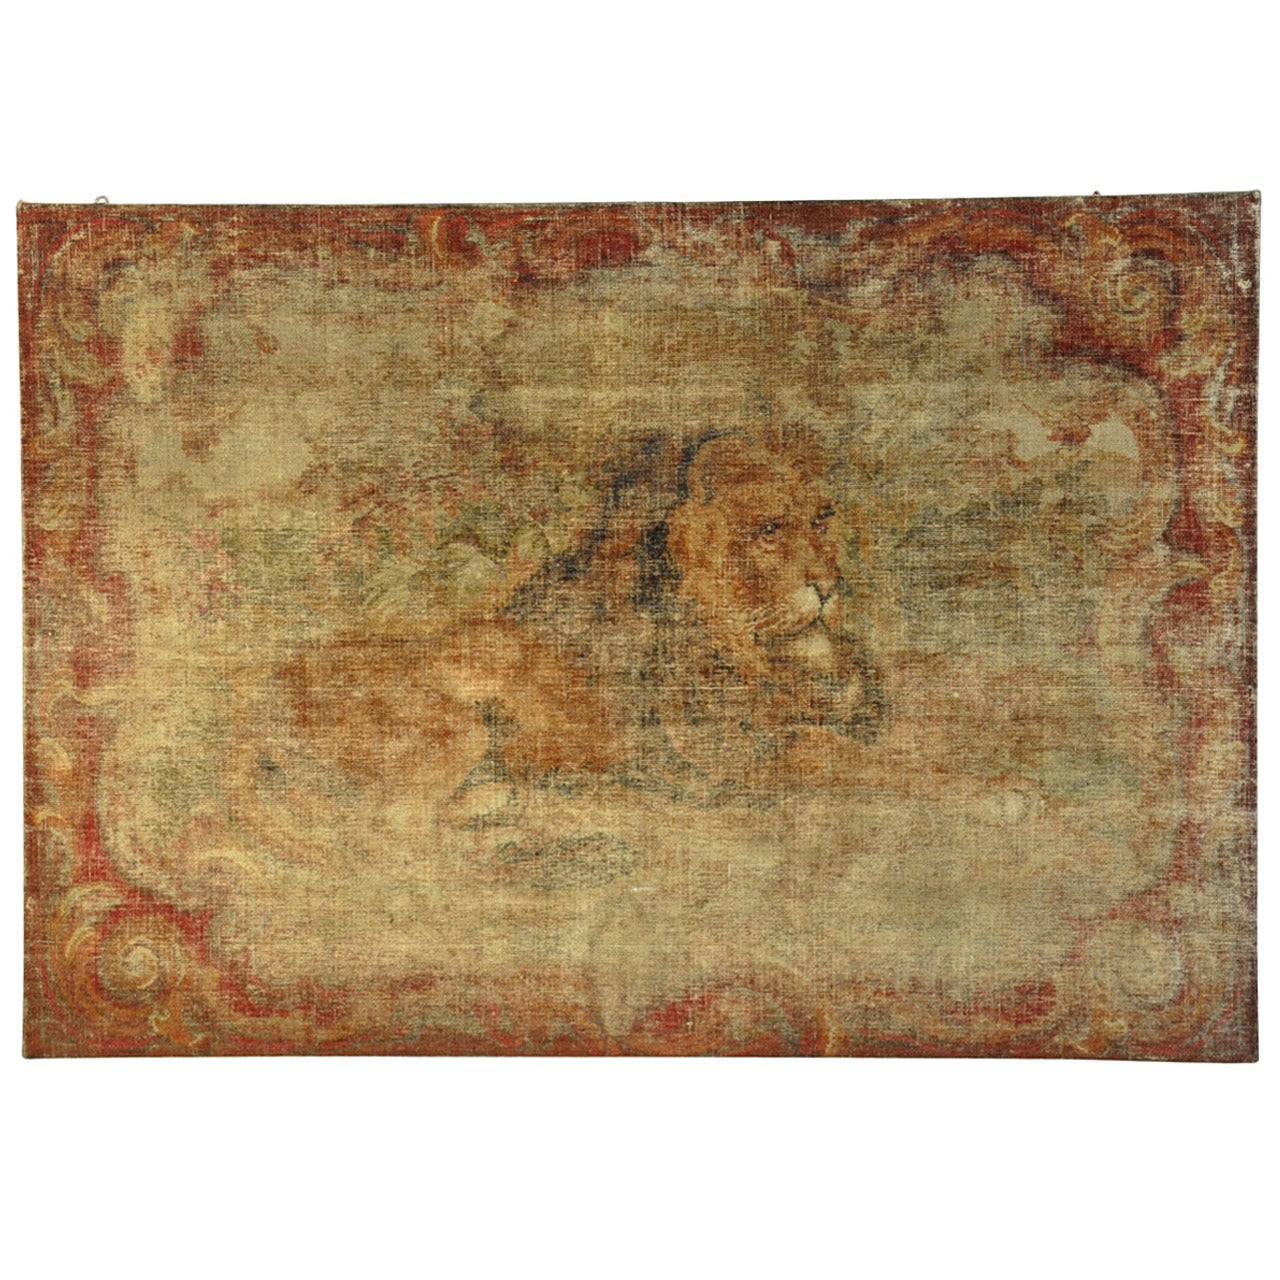 18th Century Italian Needlepoint of a Recumbent Lion